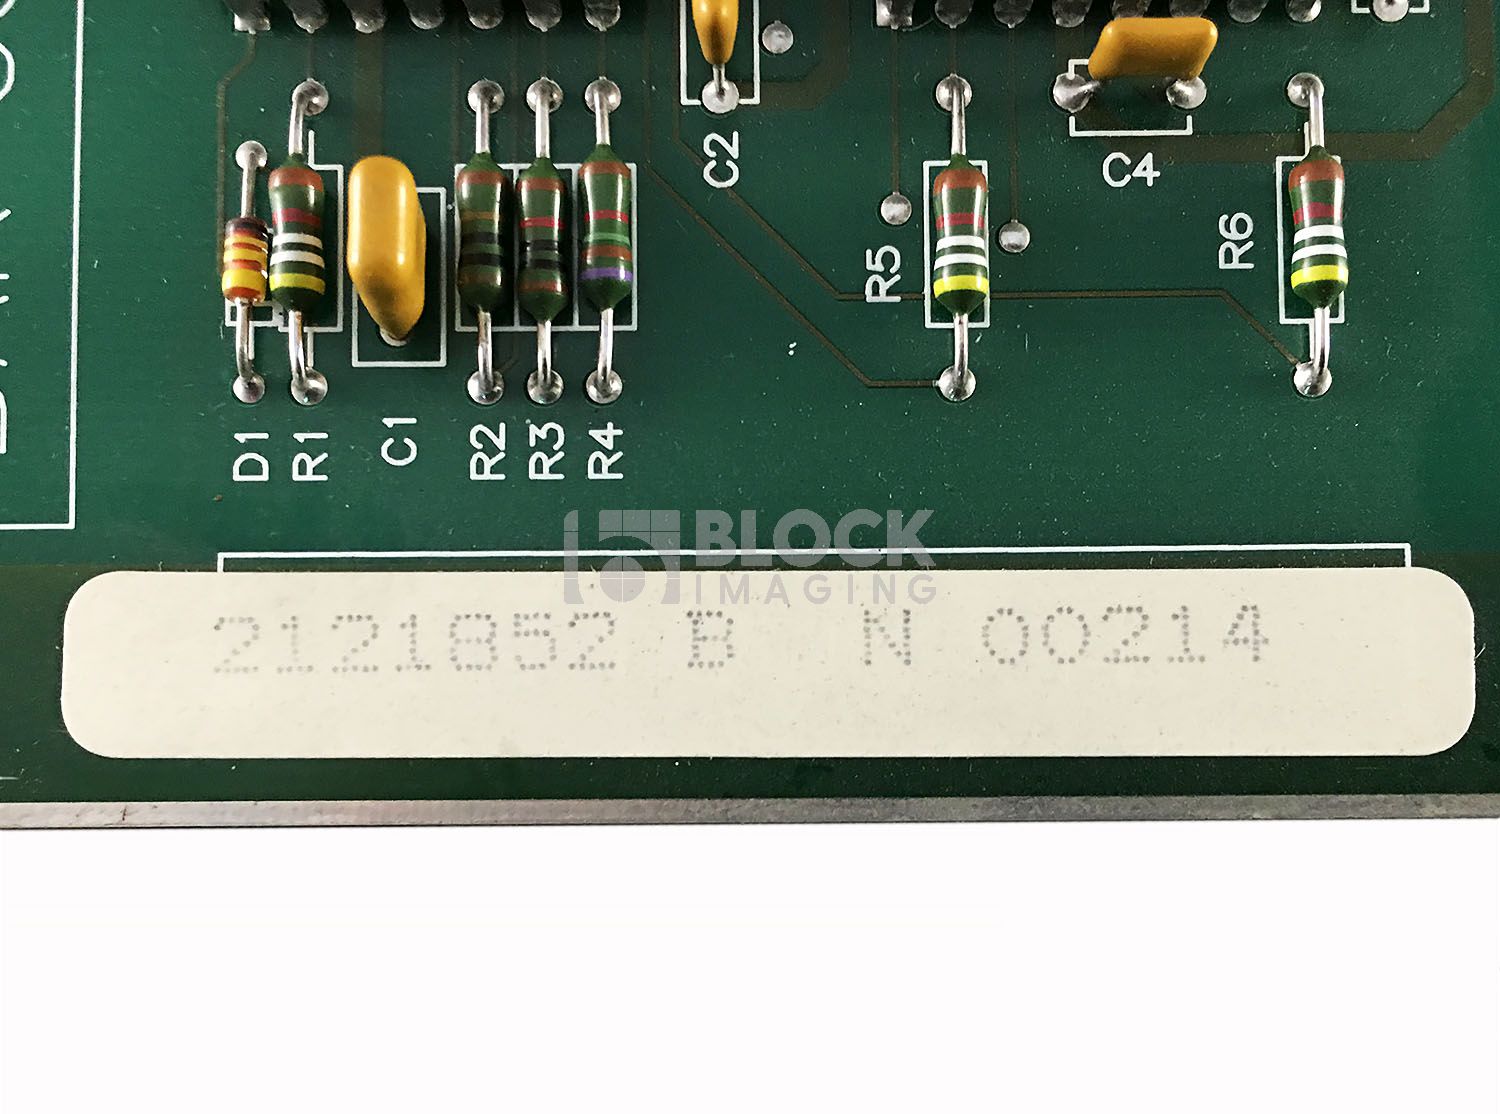 2121852 Rotor Control Board for GE CT | Block Imaging